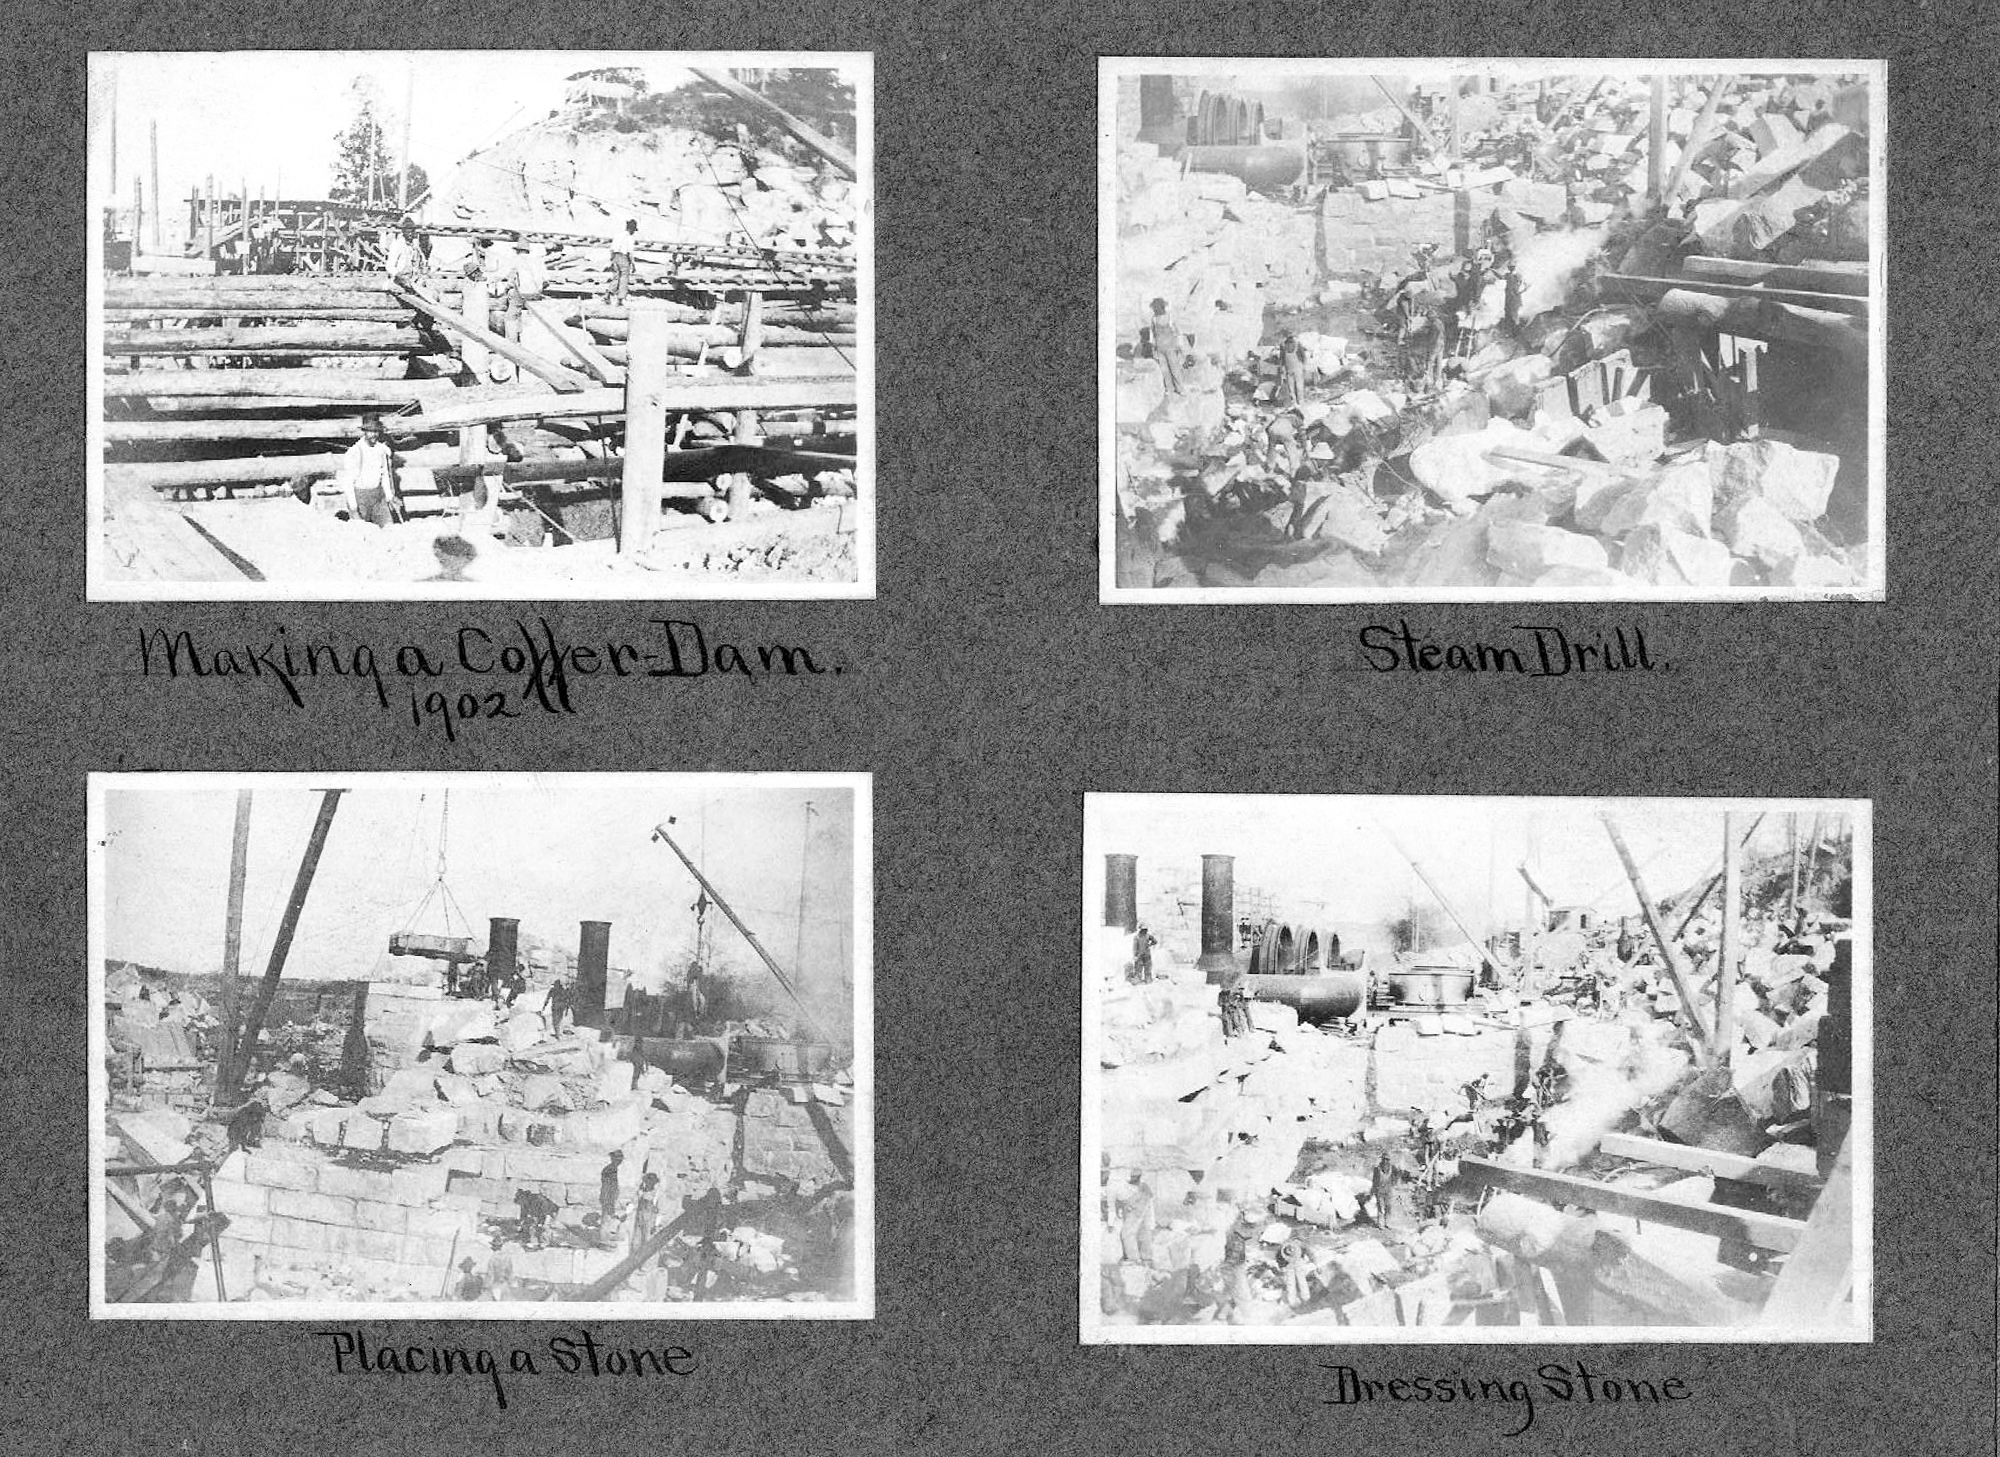 CONSTRUCTION IMAGES - 1902